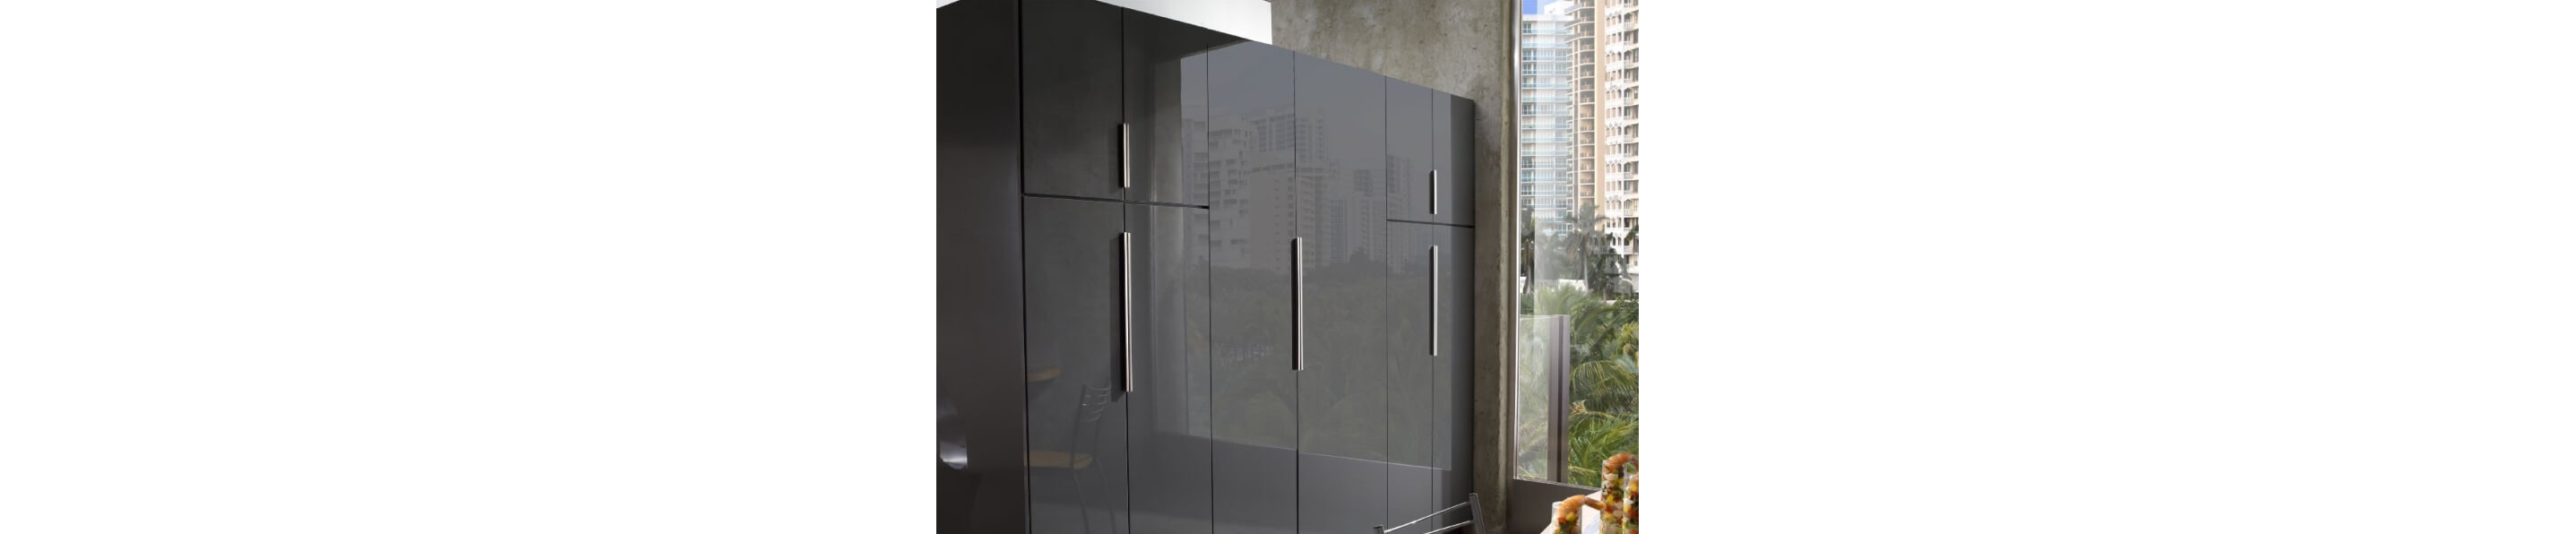 JennAir® built-in refrigerators installed with custom full-height panels.